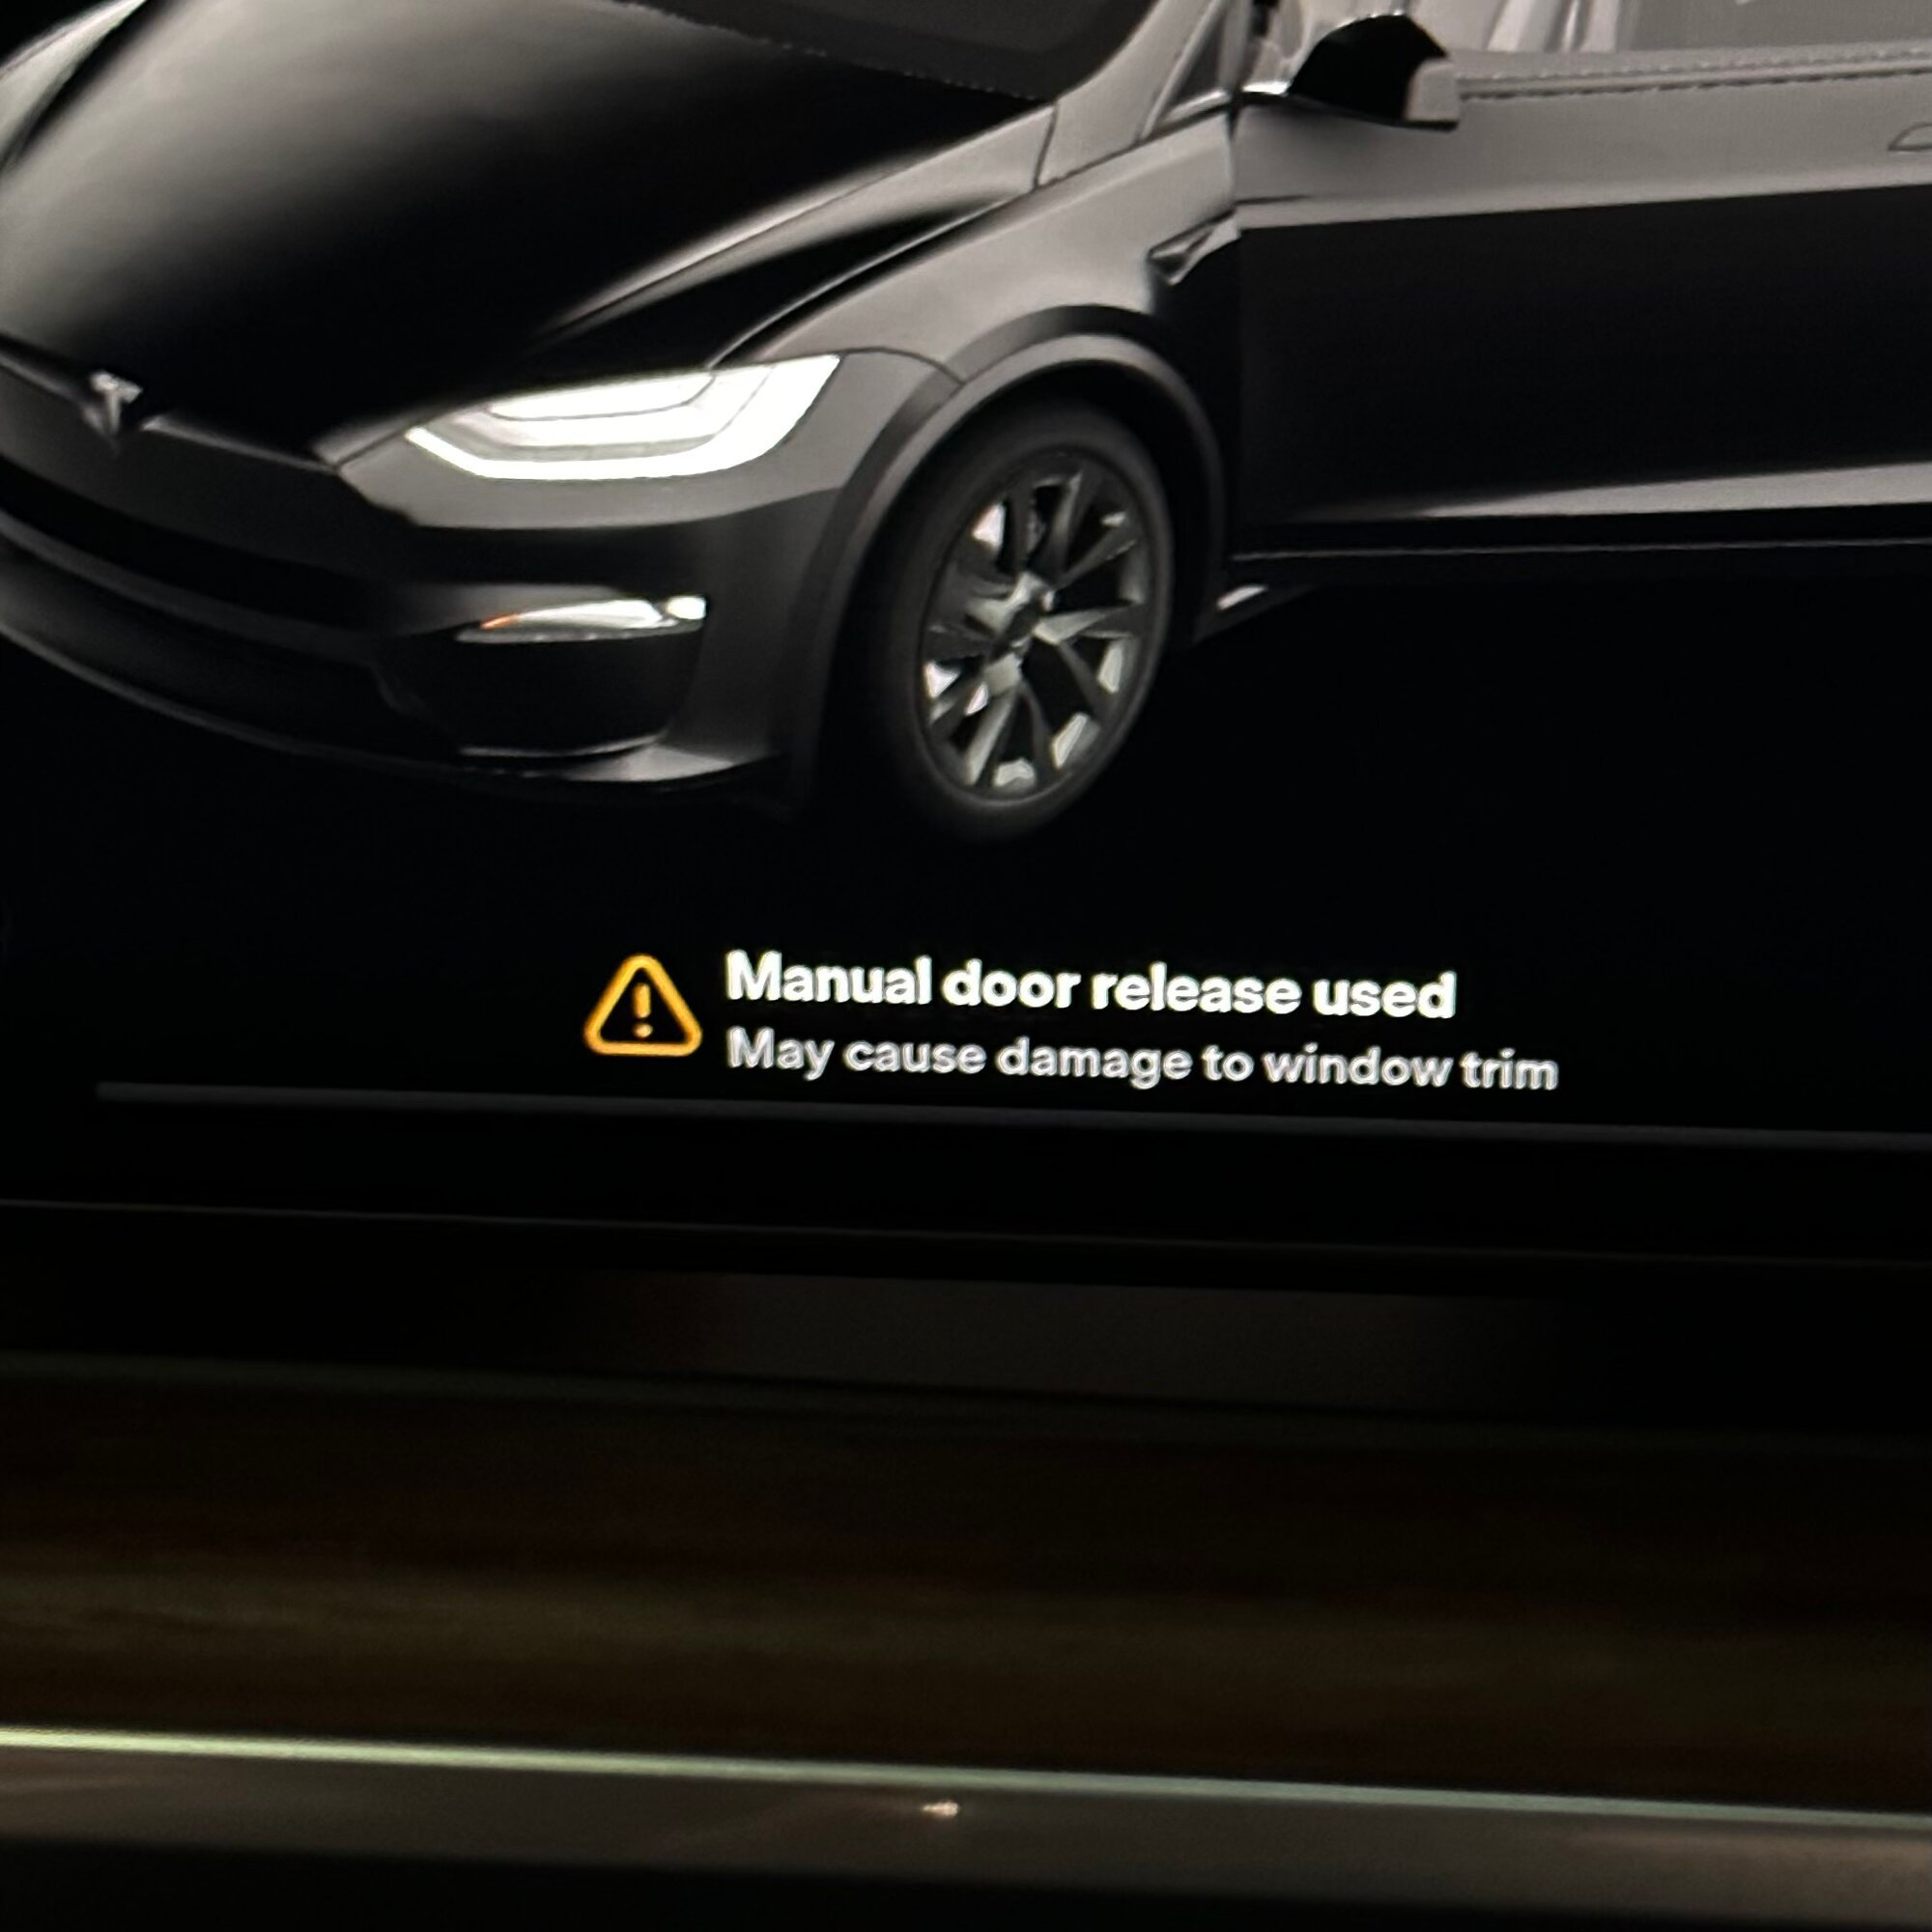 Refresh X - Erroneous Manual Door Released Used Notification | Tesla Motors  Club